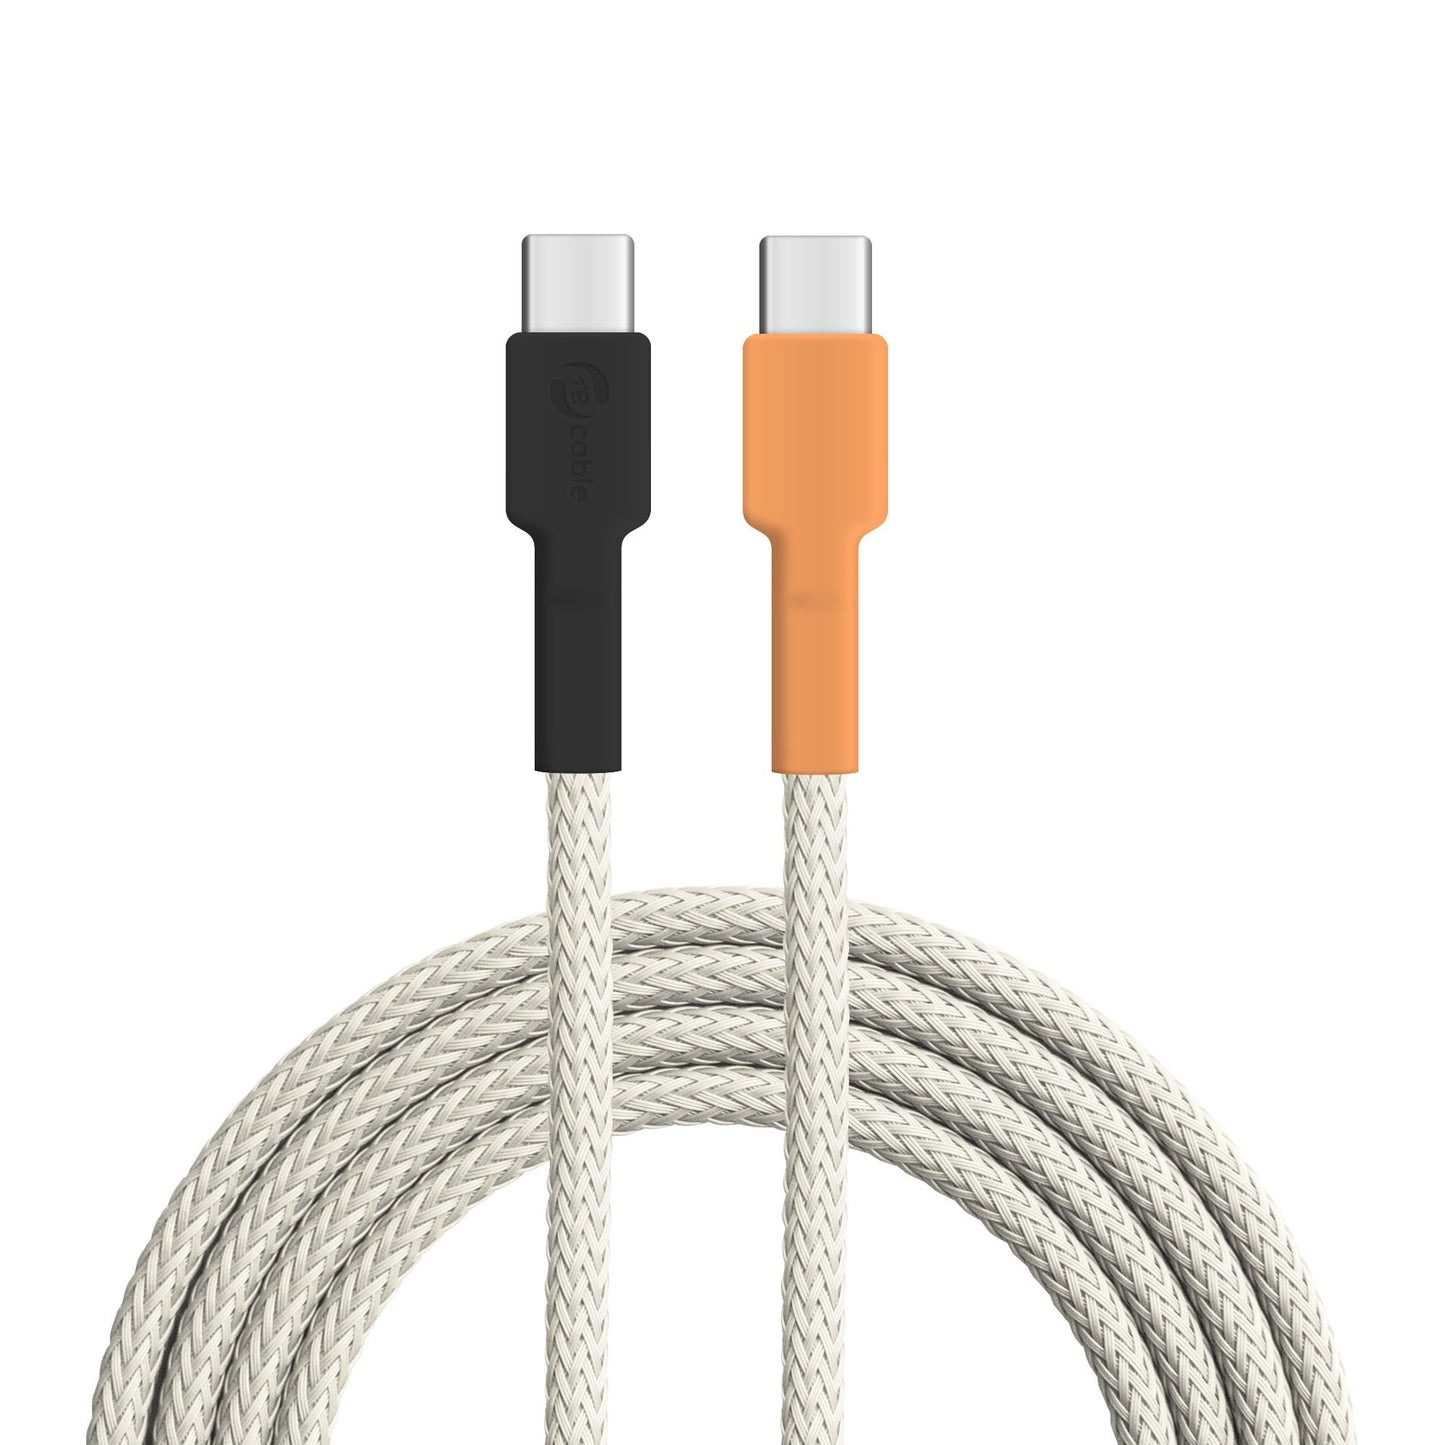 USB cable, Design: King penguin, Connectors: USB C to USB C 